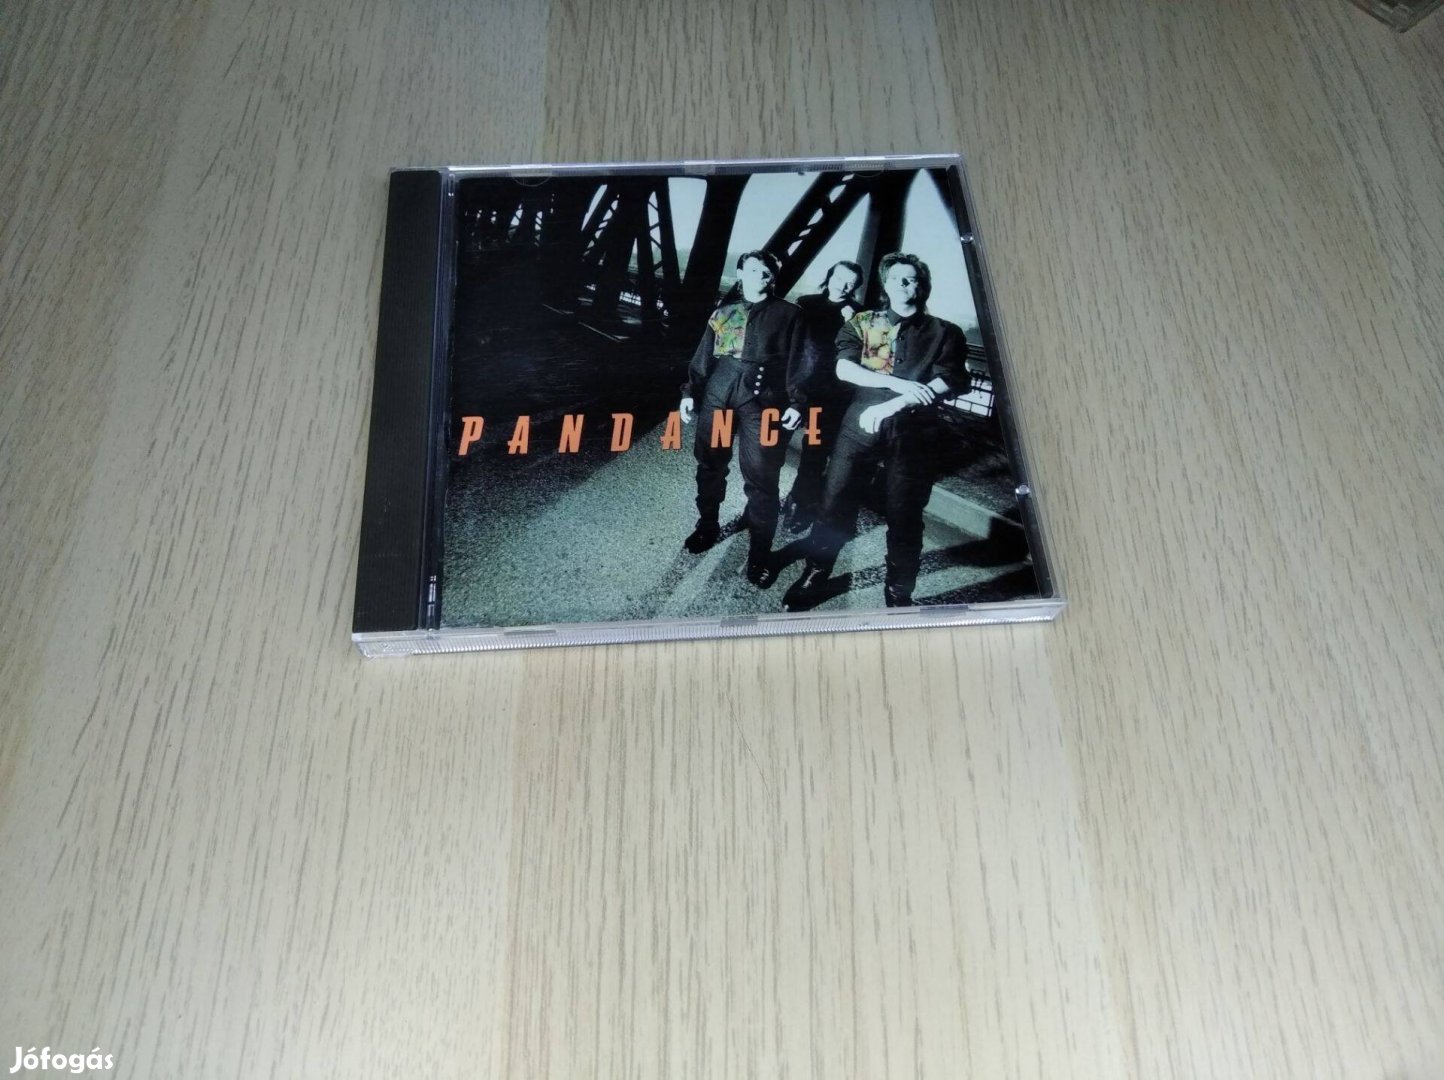 Pandance - Pandance / CD